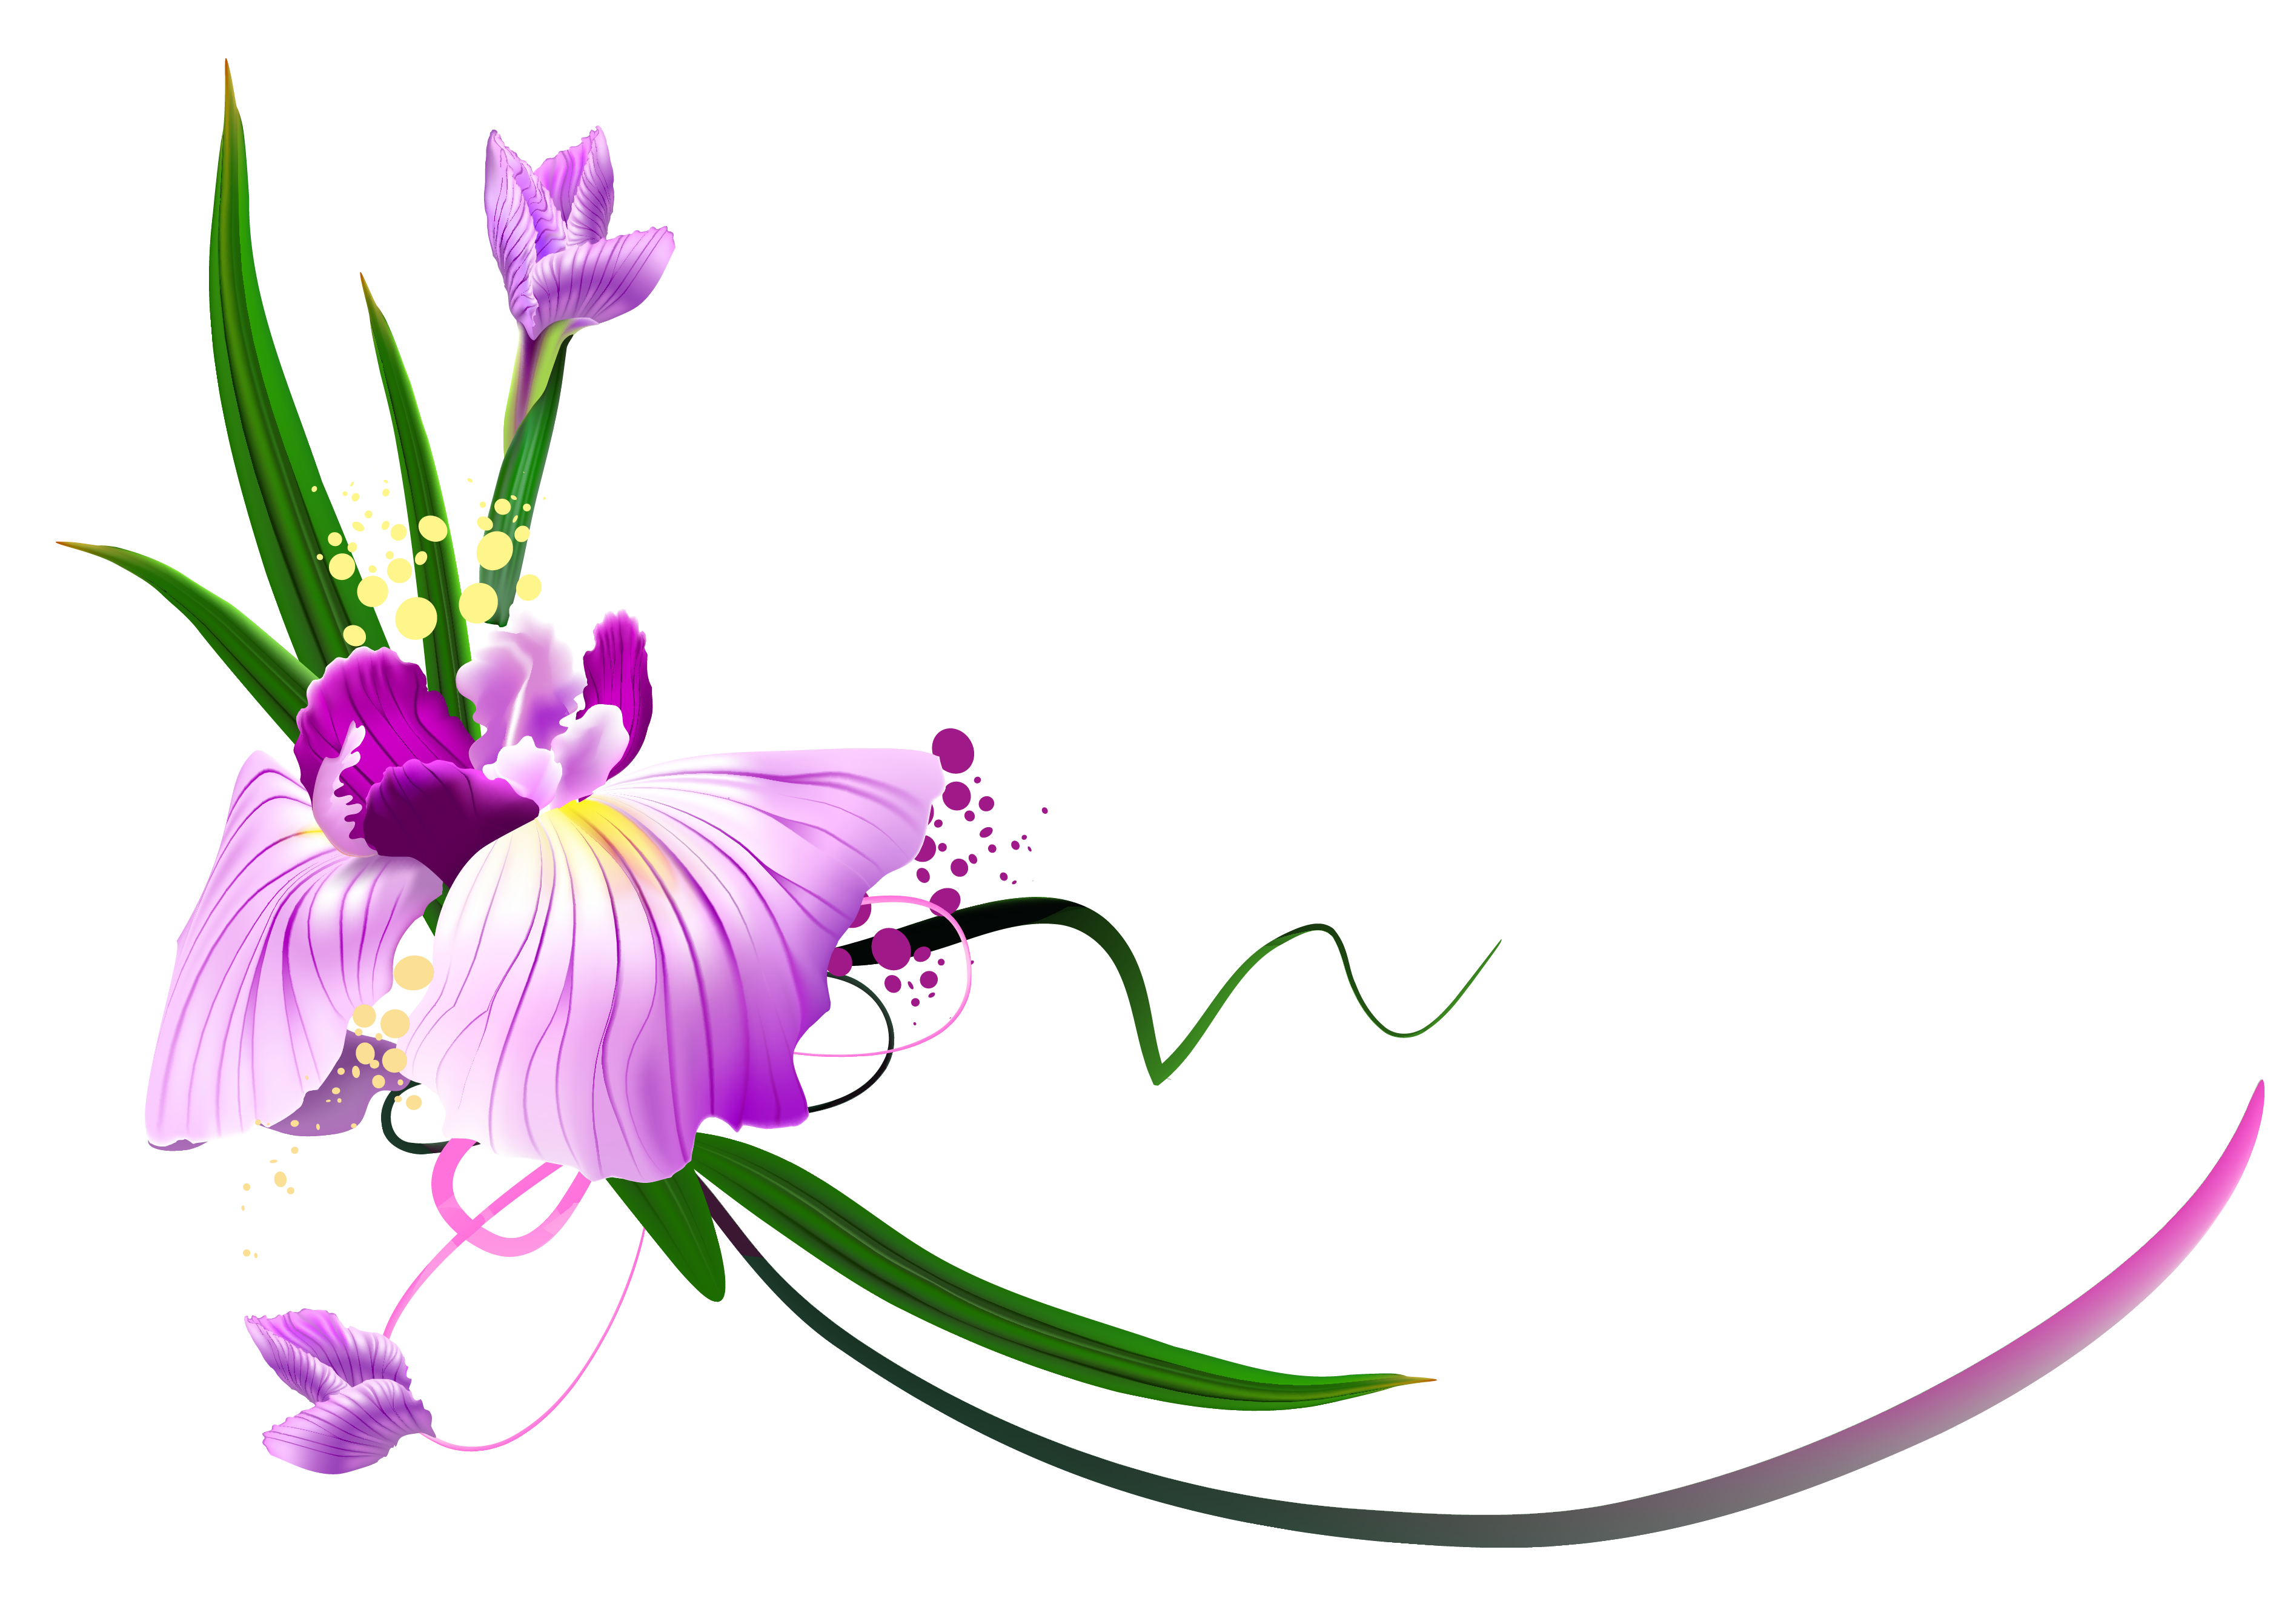 https://gallery.yopriceville.com/var/albums/Free-Clipart-Pictures/Decorative-Elements-PNG/Beautiful_Purple_Floral_Decor_PNG_Clipart.png?m=1434276877